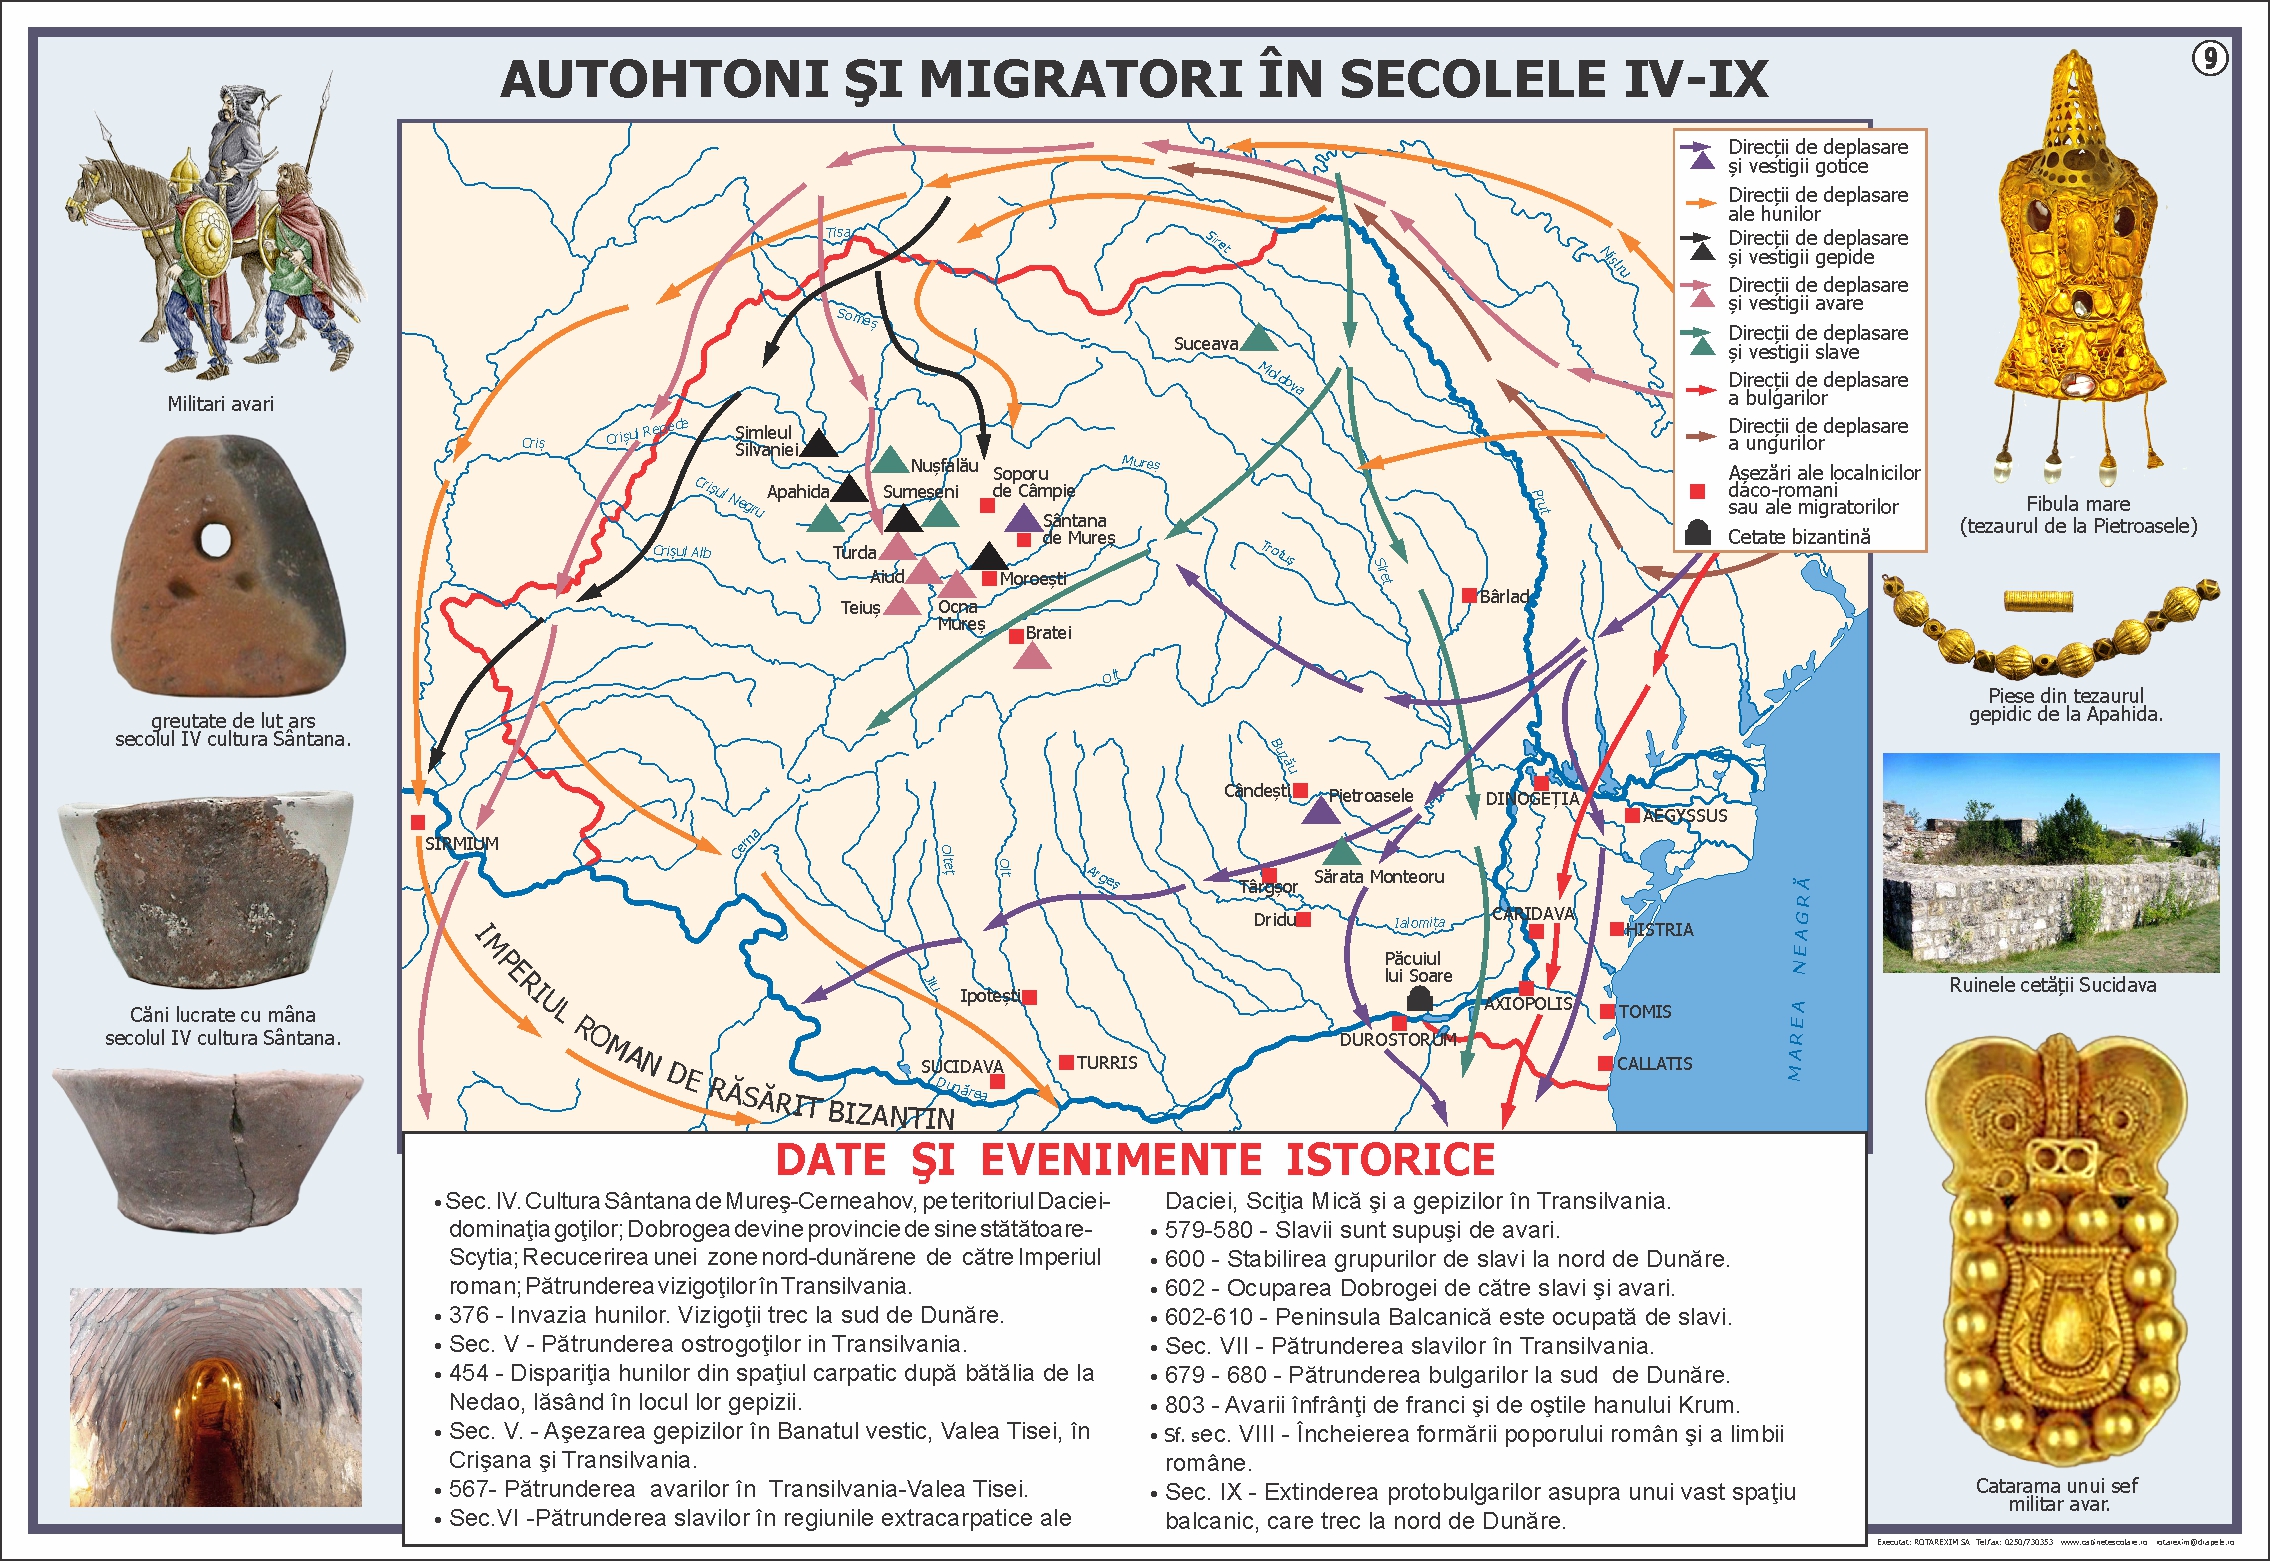 Autohtoni si migratori in secolele IV-IX